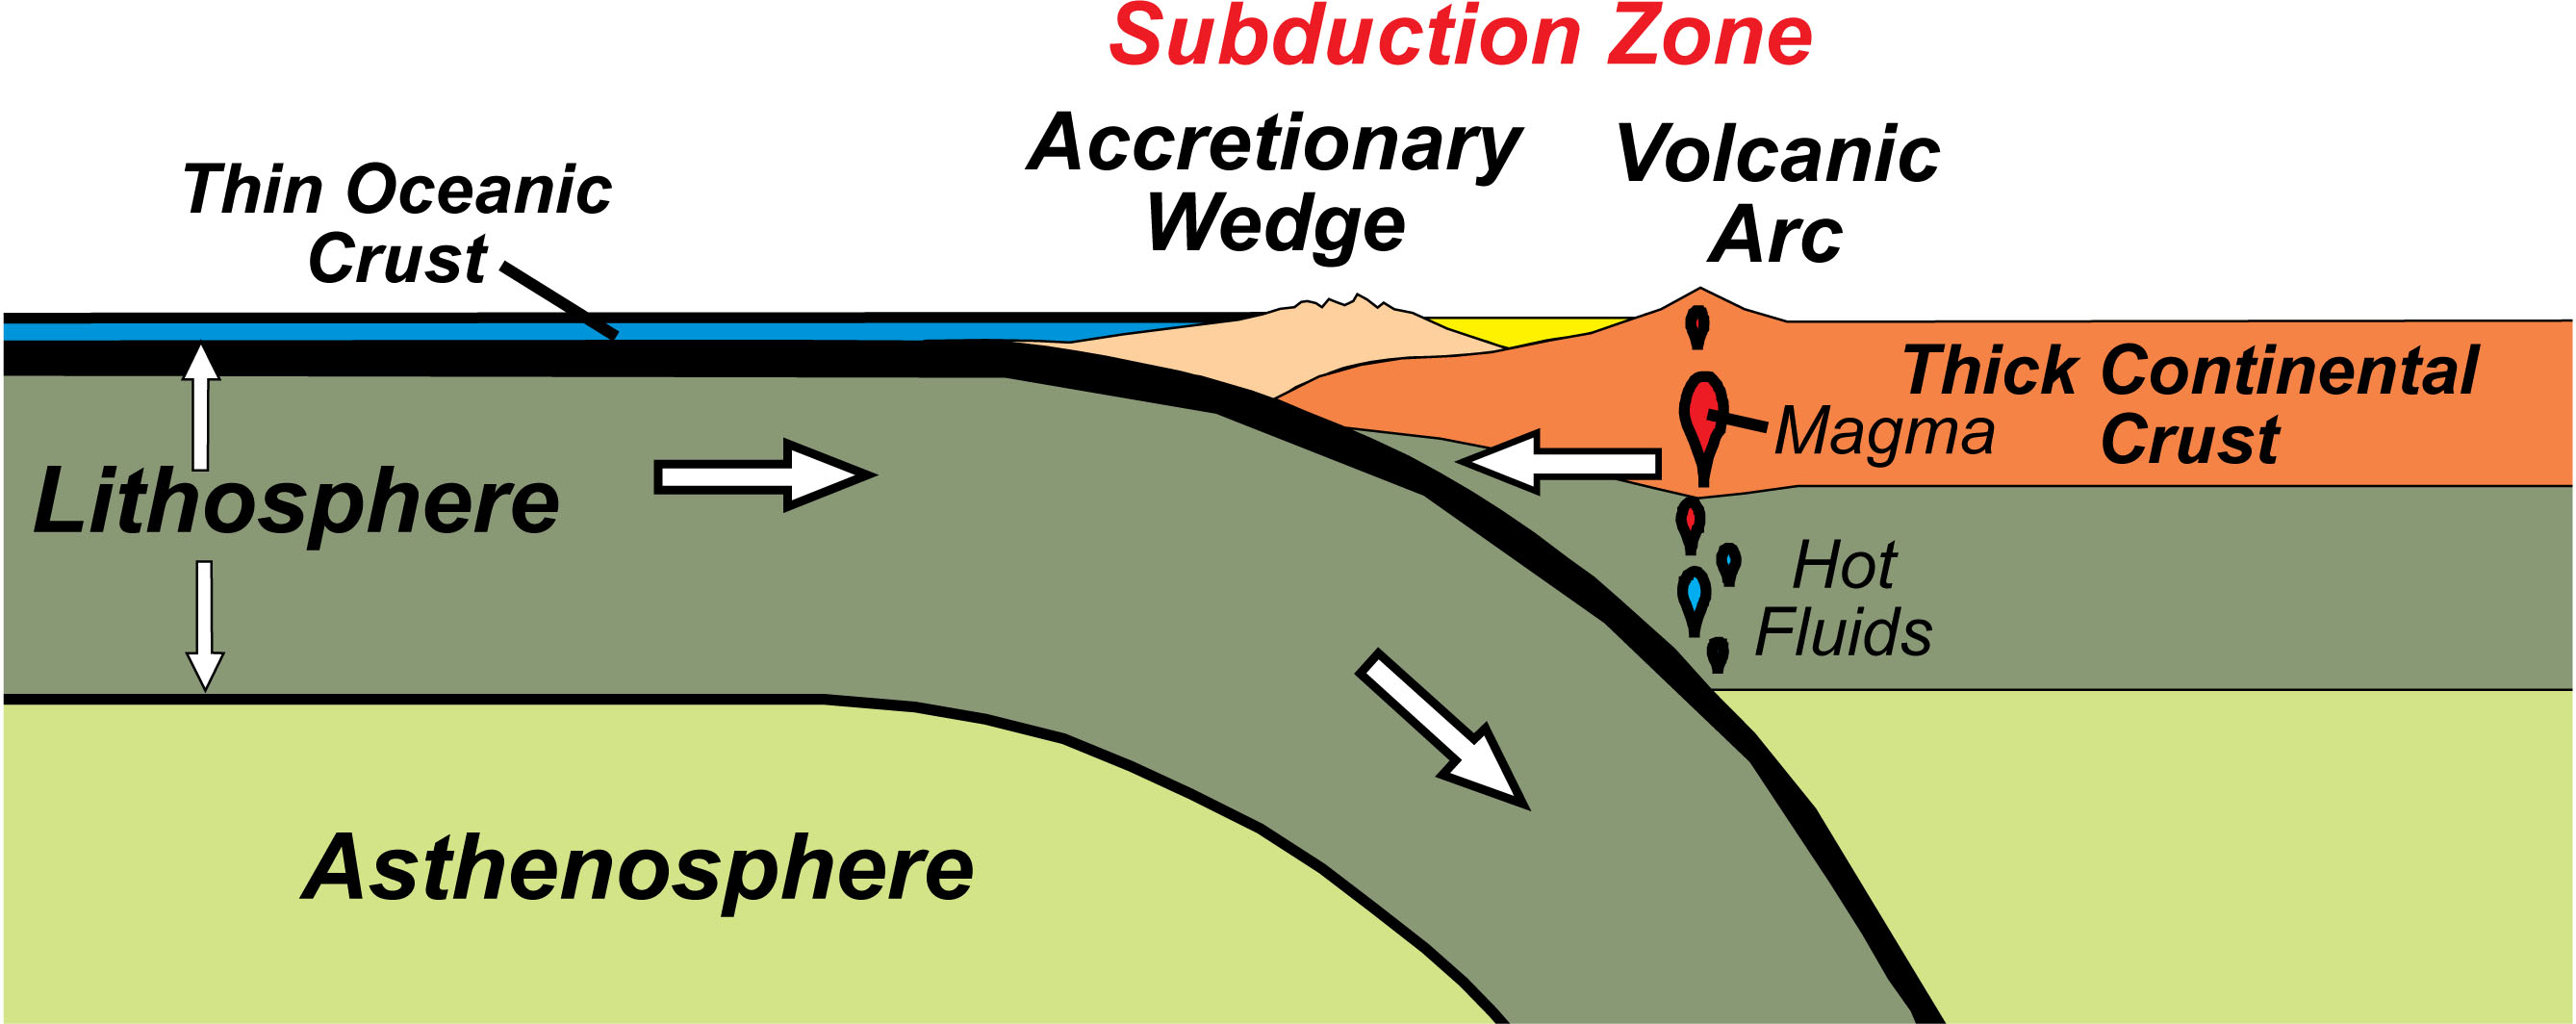 subduction boundary